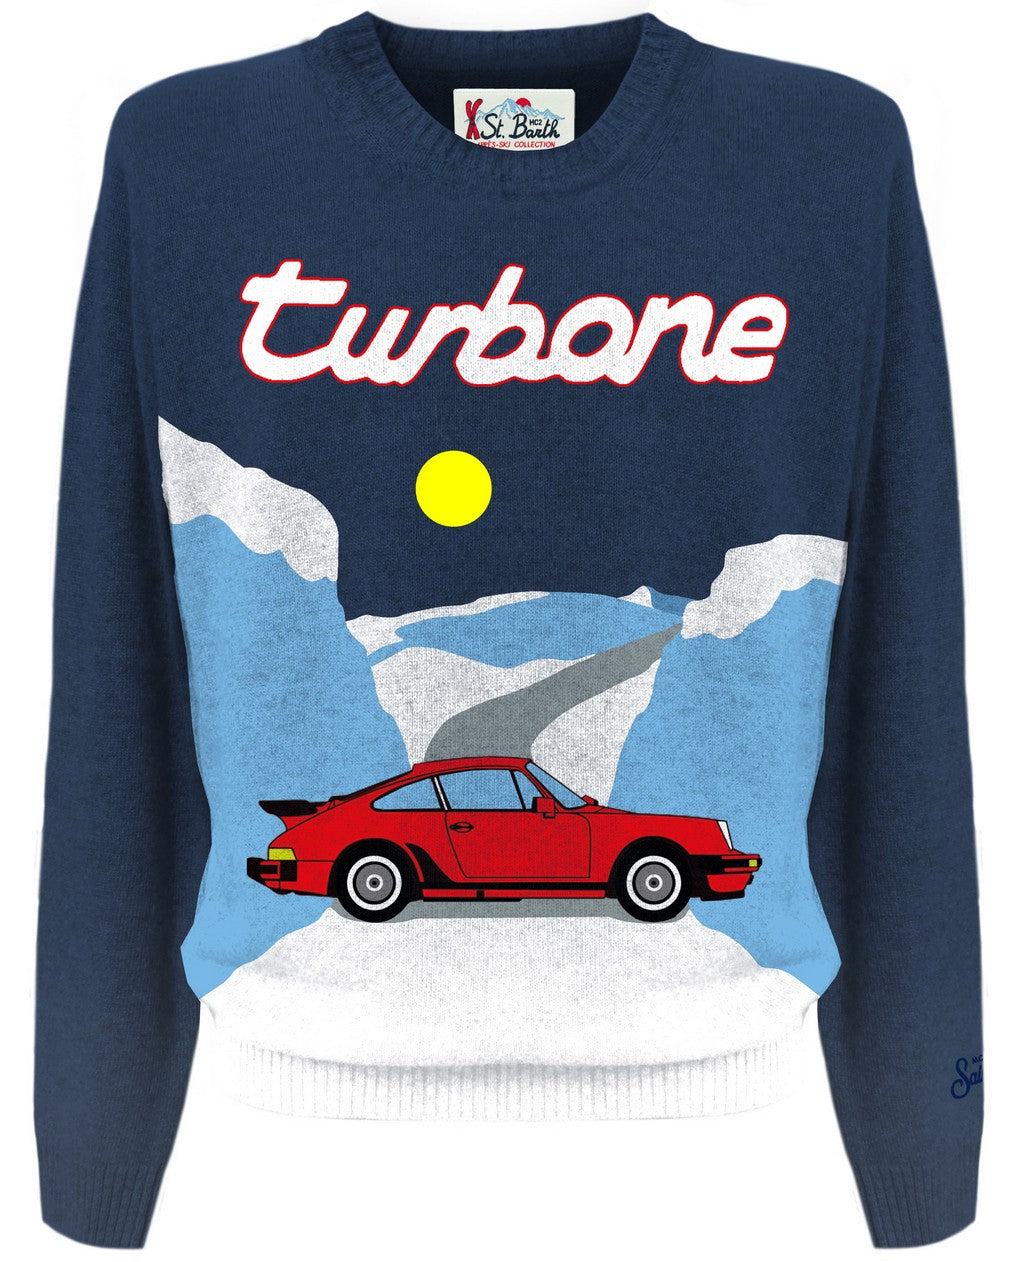 Heron Turbone Men's Sweater